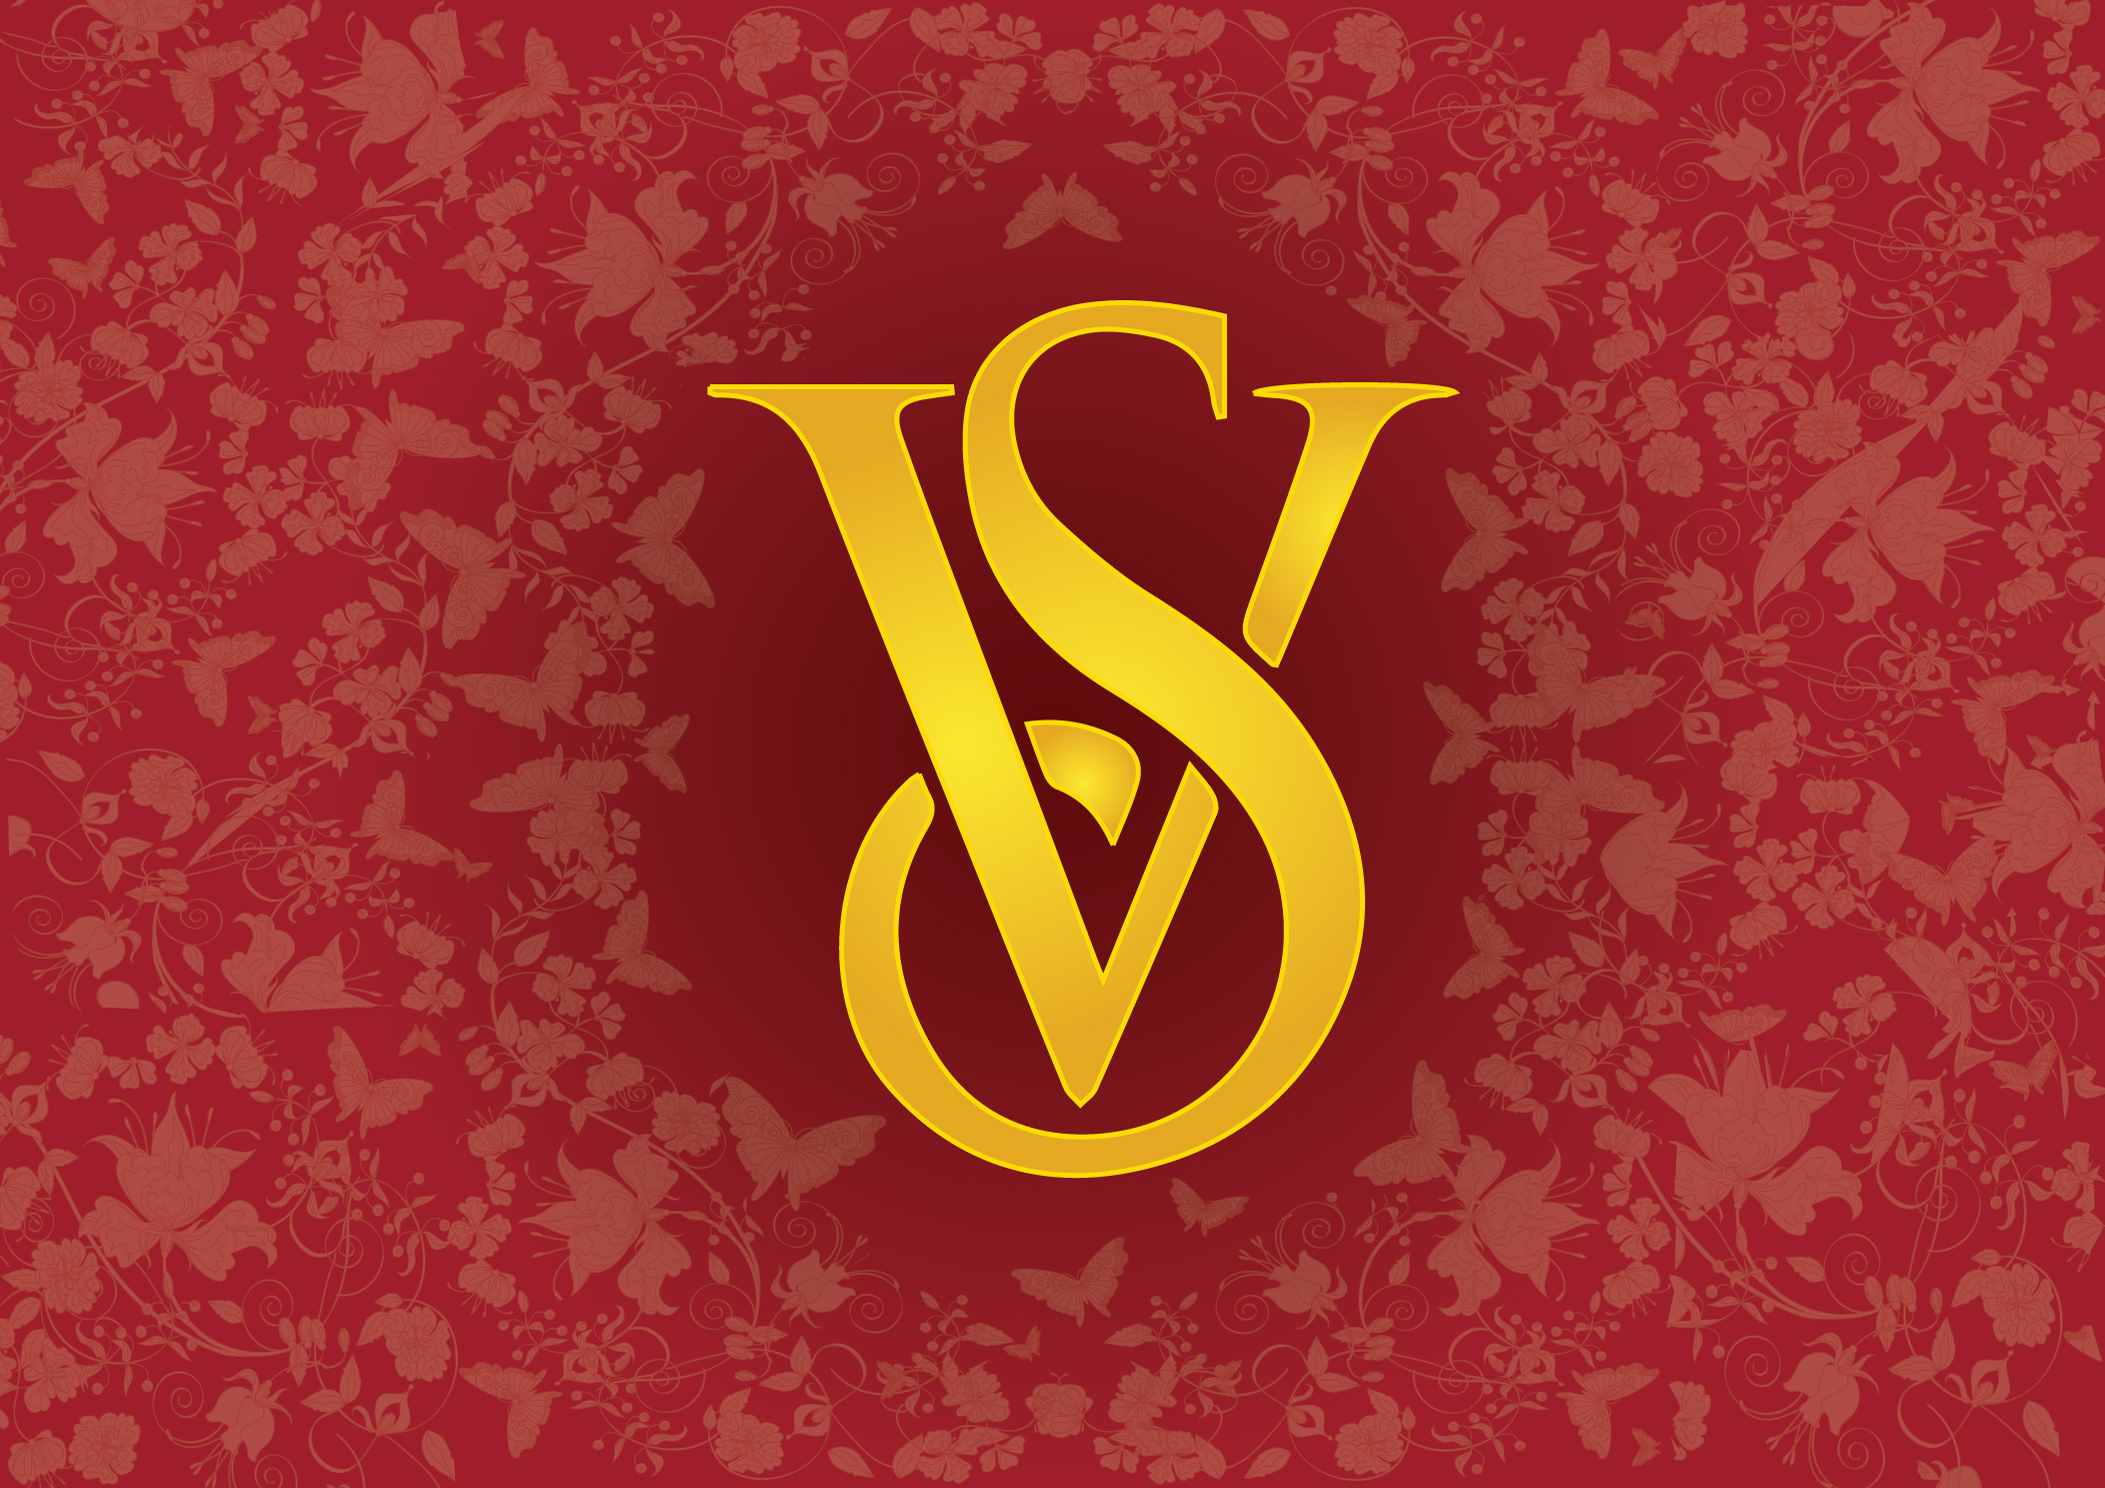 Vs b c. Vs эмблема. Логотип с буквами vs. Красивые буквы vs. Логотип с буквами SV.